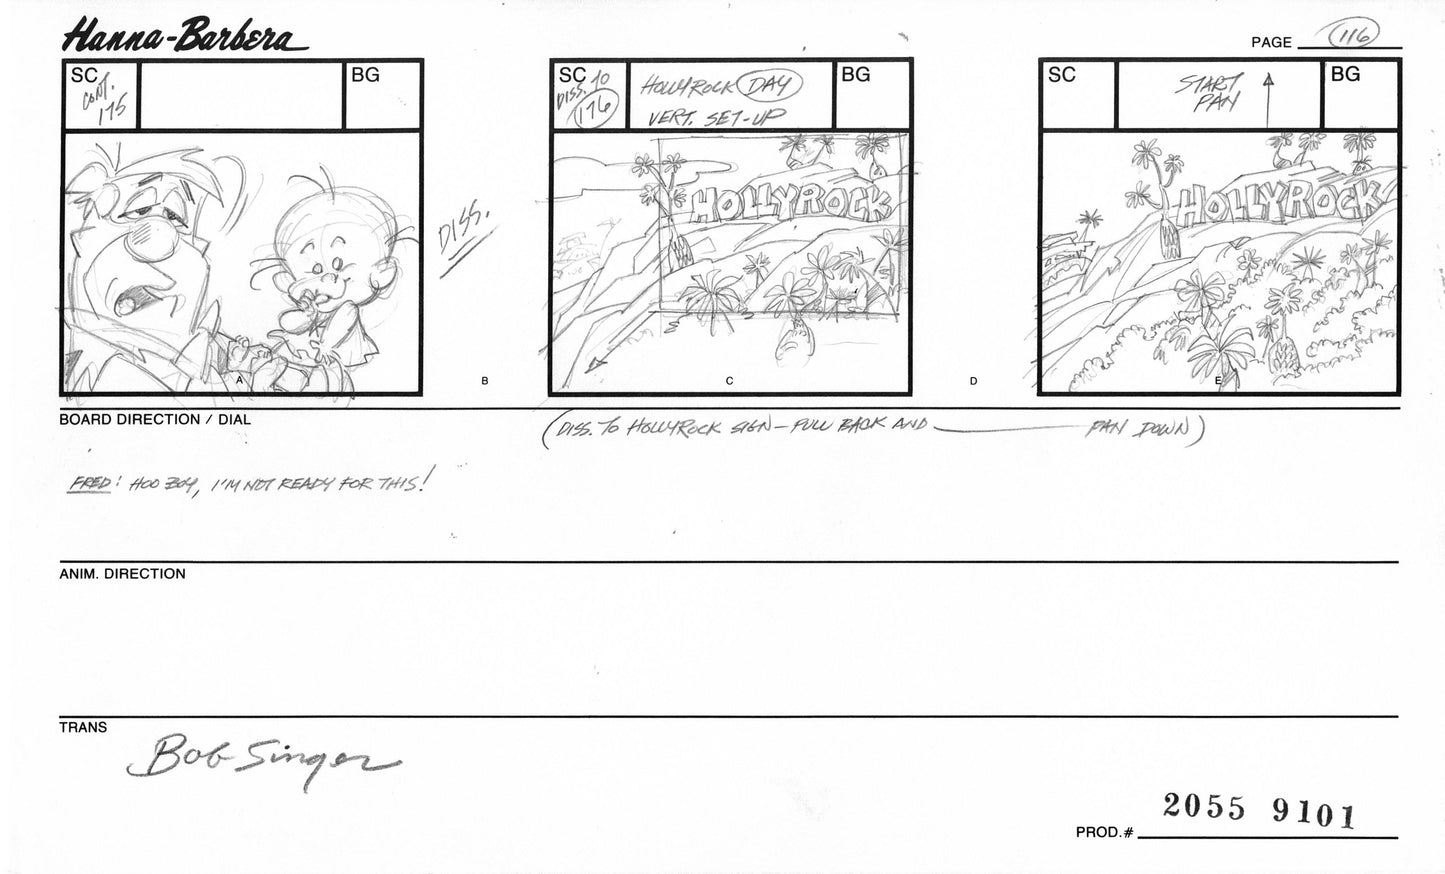 Flintstones Hollyrock-a-Bye Baby Animation Storyboard from Hanna Barbera Signed by Bob Singer 1993 116